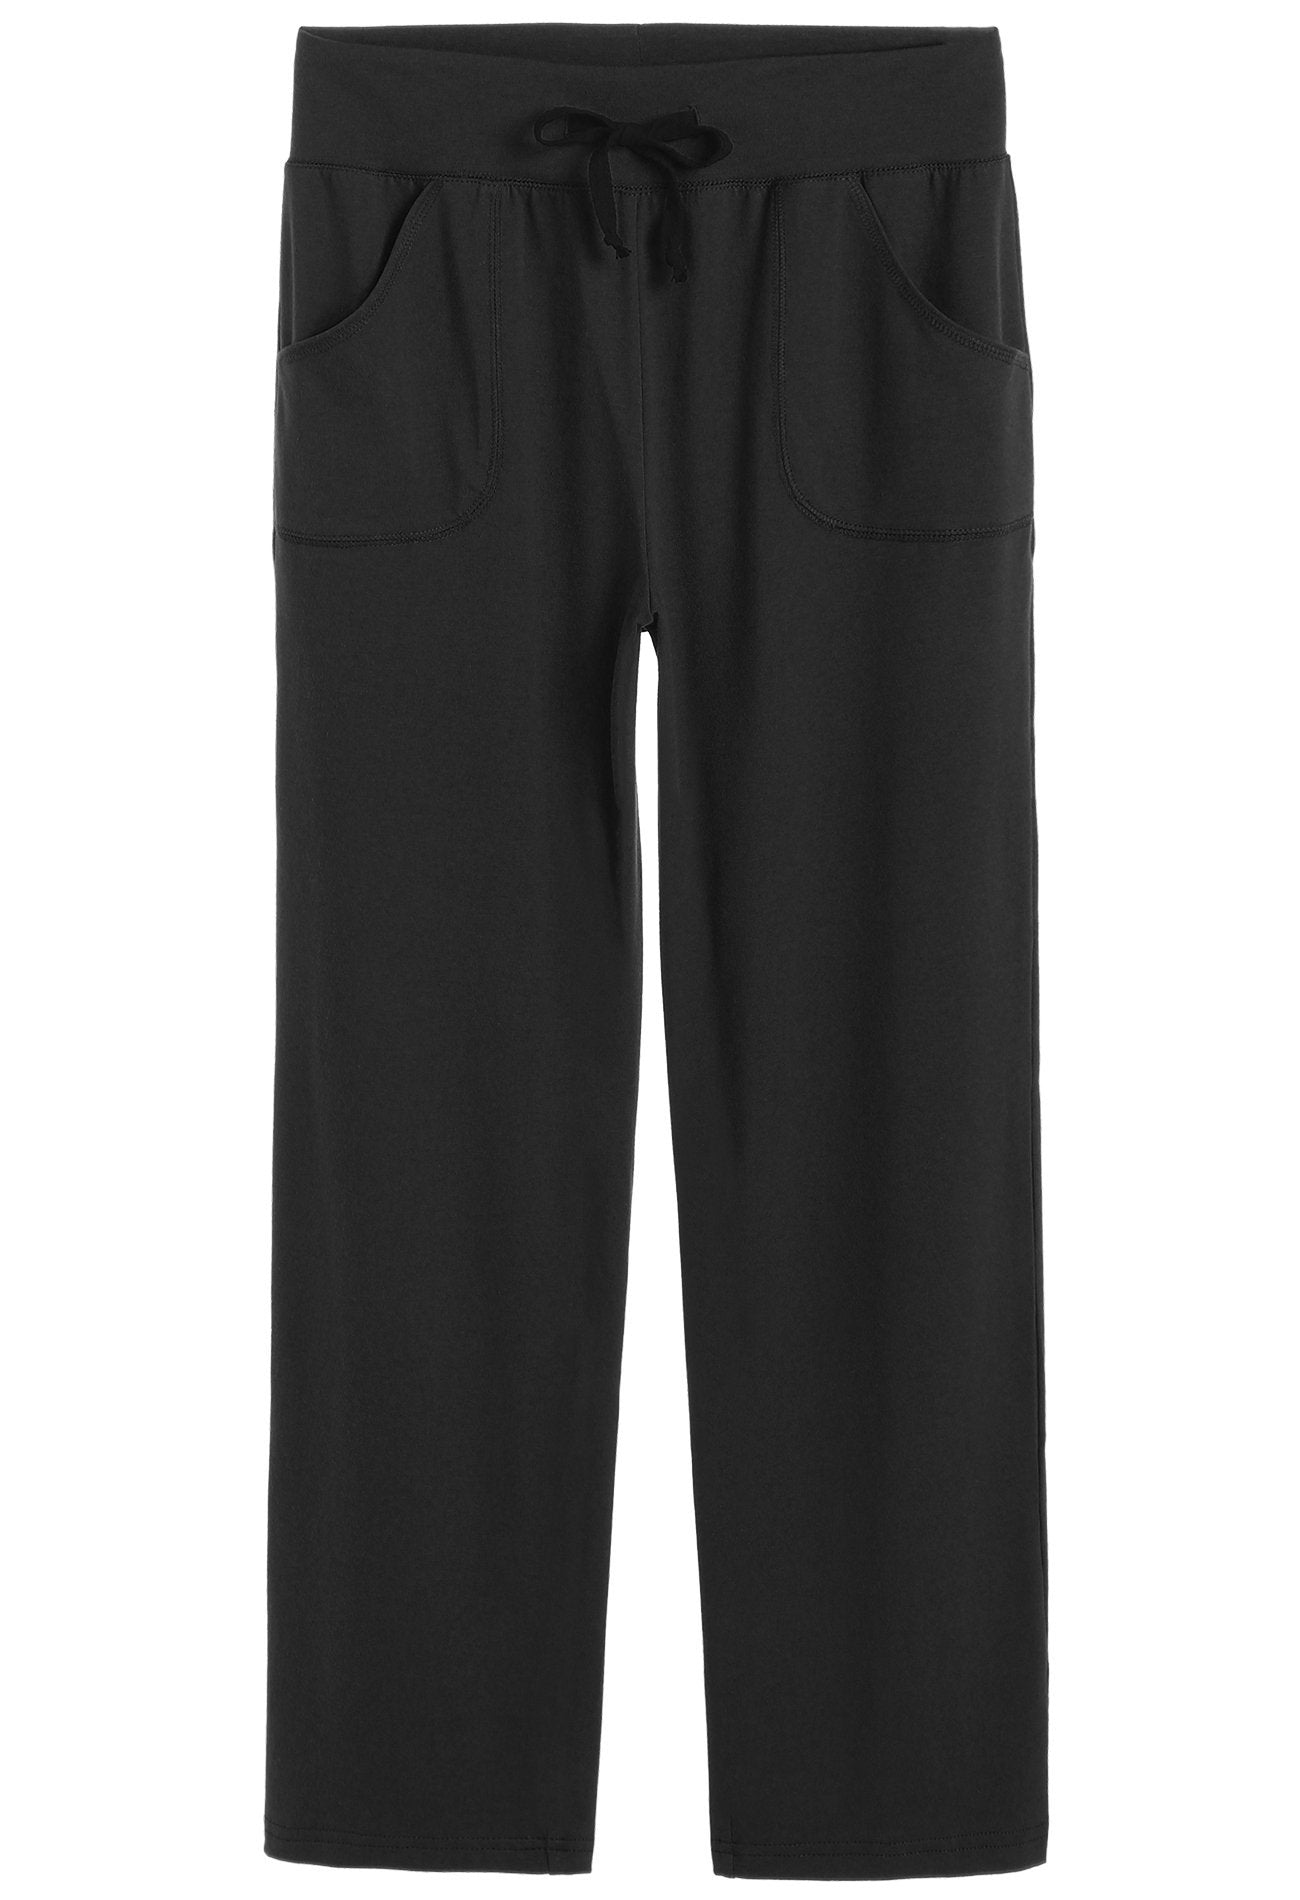 Buy HUE Womens Plus Size Printed Knit Capri Pajama Sleep Pant BlackNight  Cap 3X at Amazonin